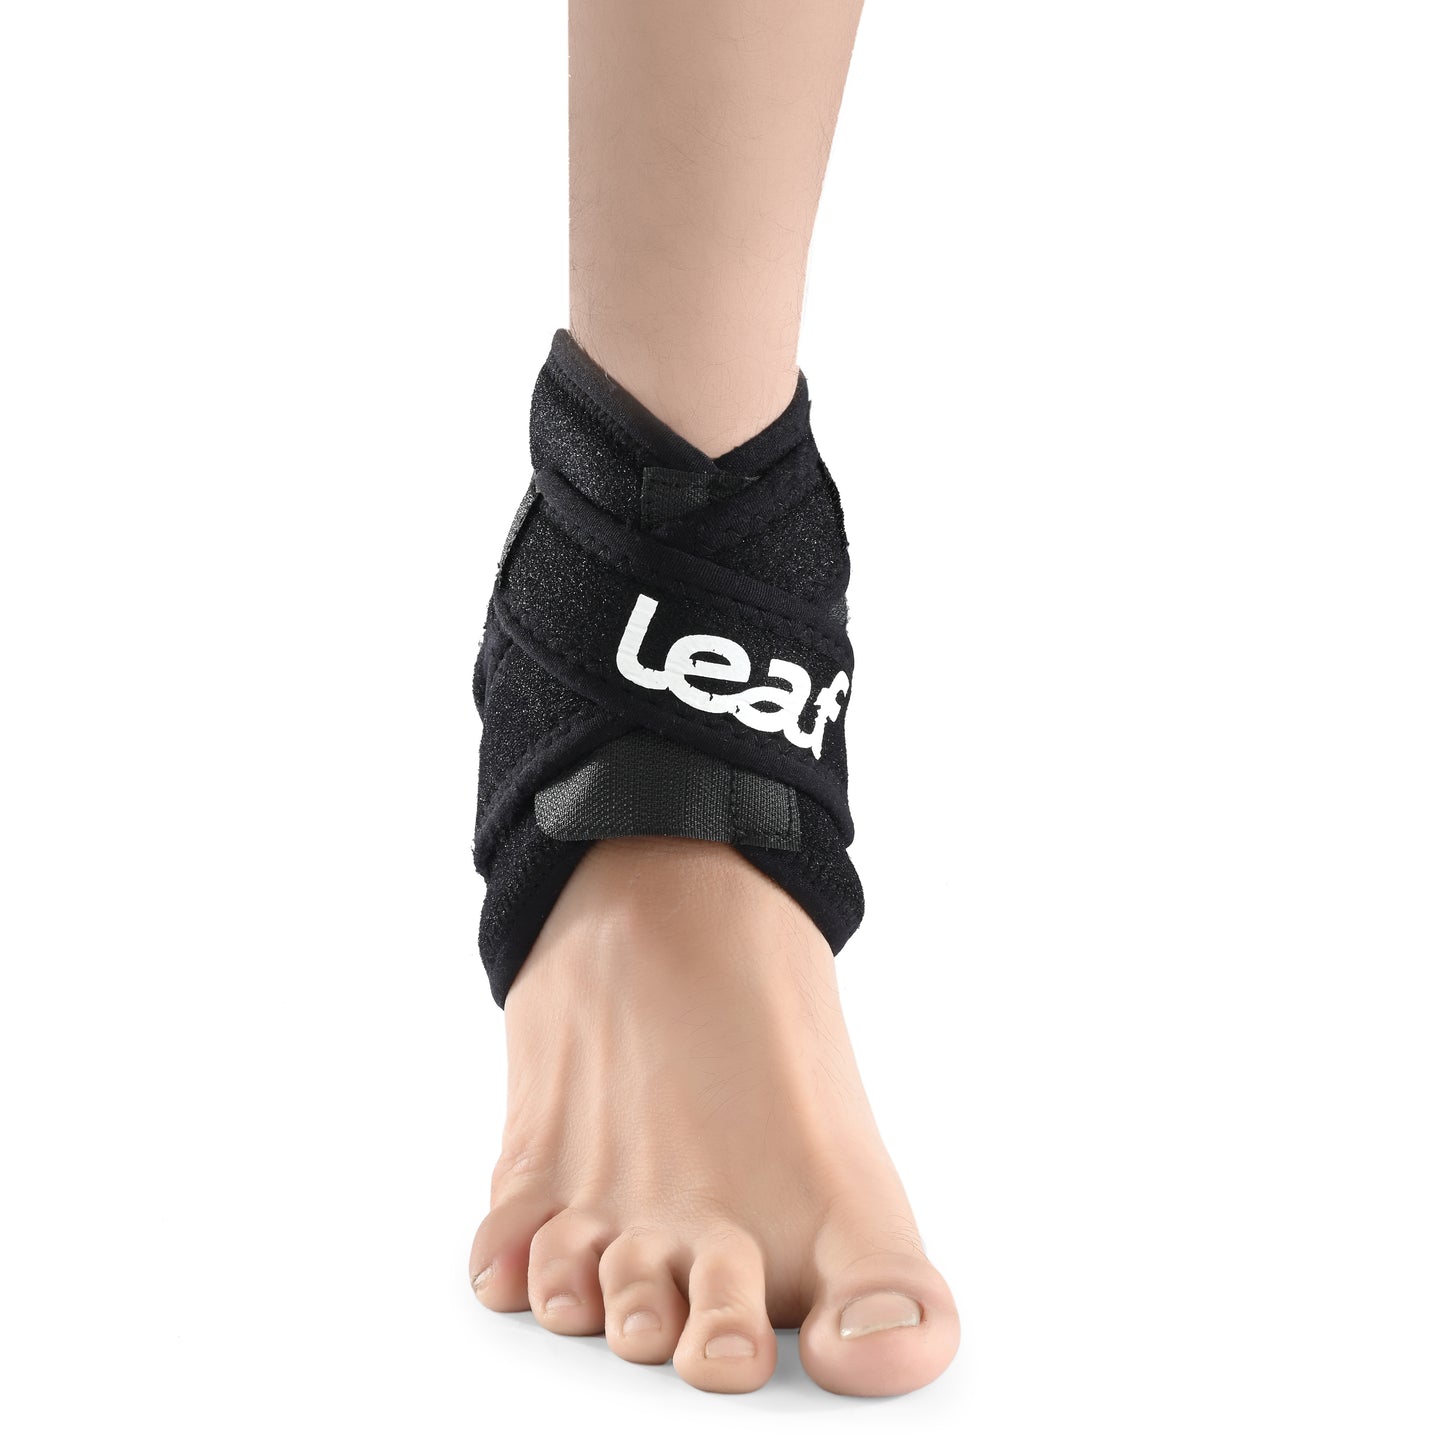 Leaf's Neoprene Ankle Wrap